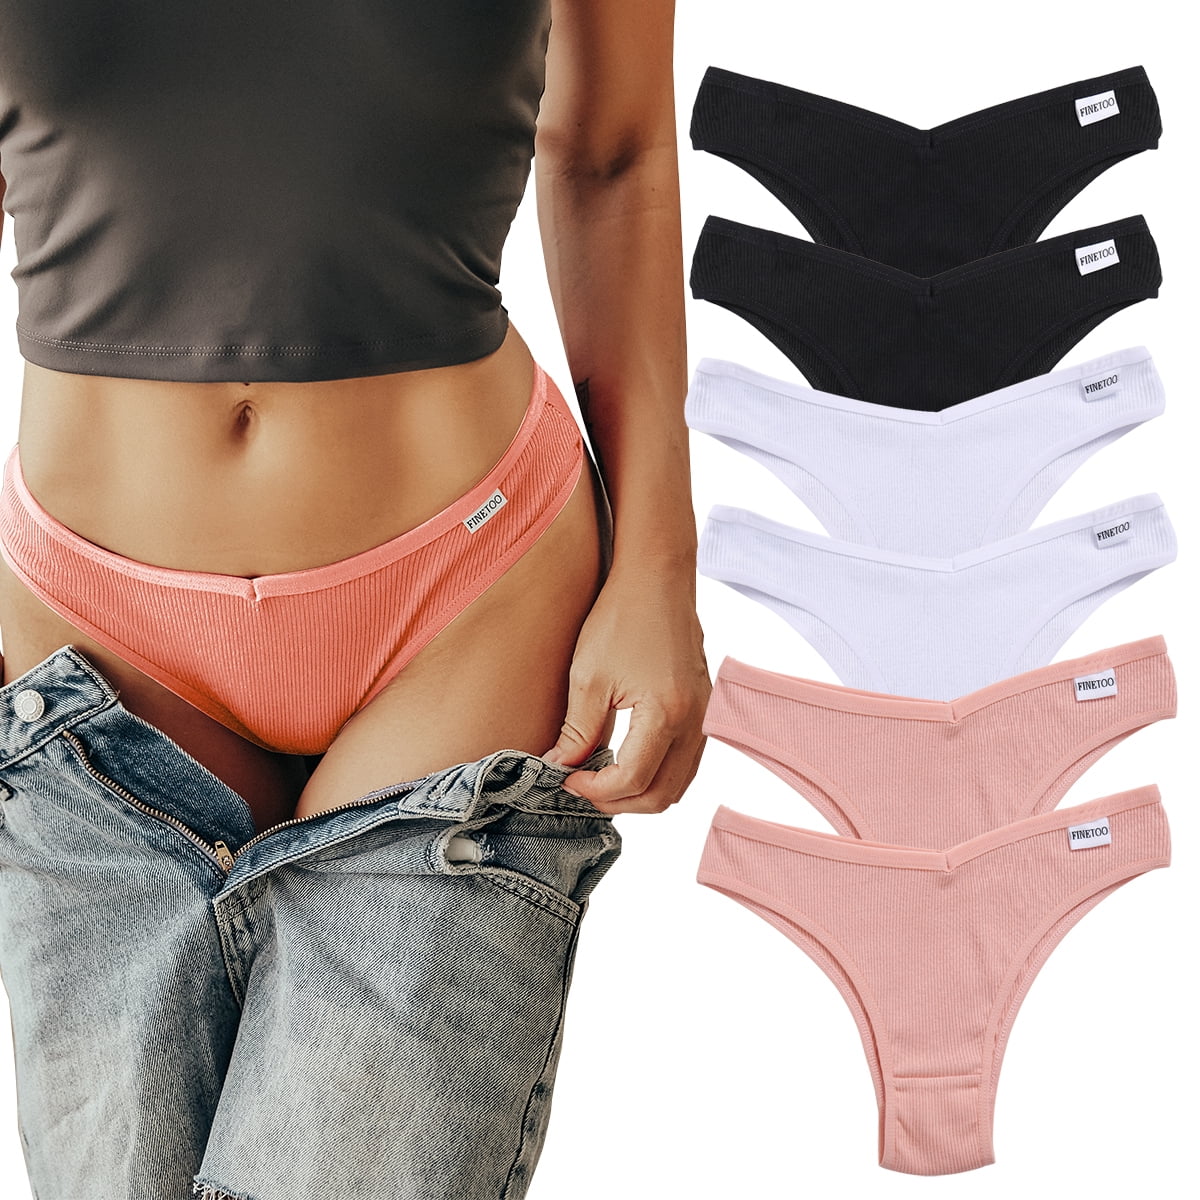 Emprella Womens Underwear Bikini Panties - Colors and Patterns May Vary -  Multi L